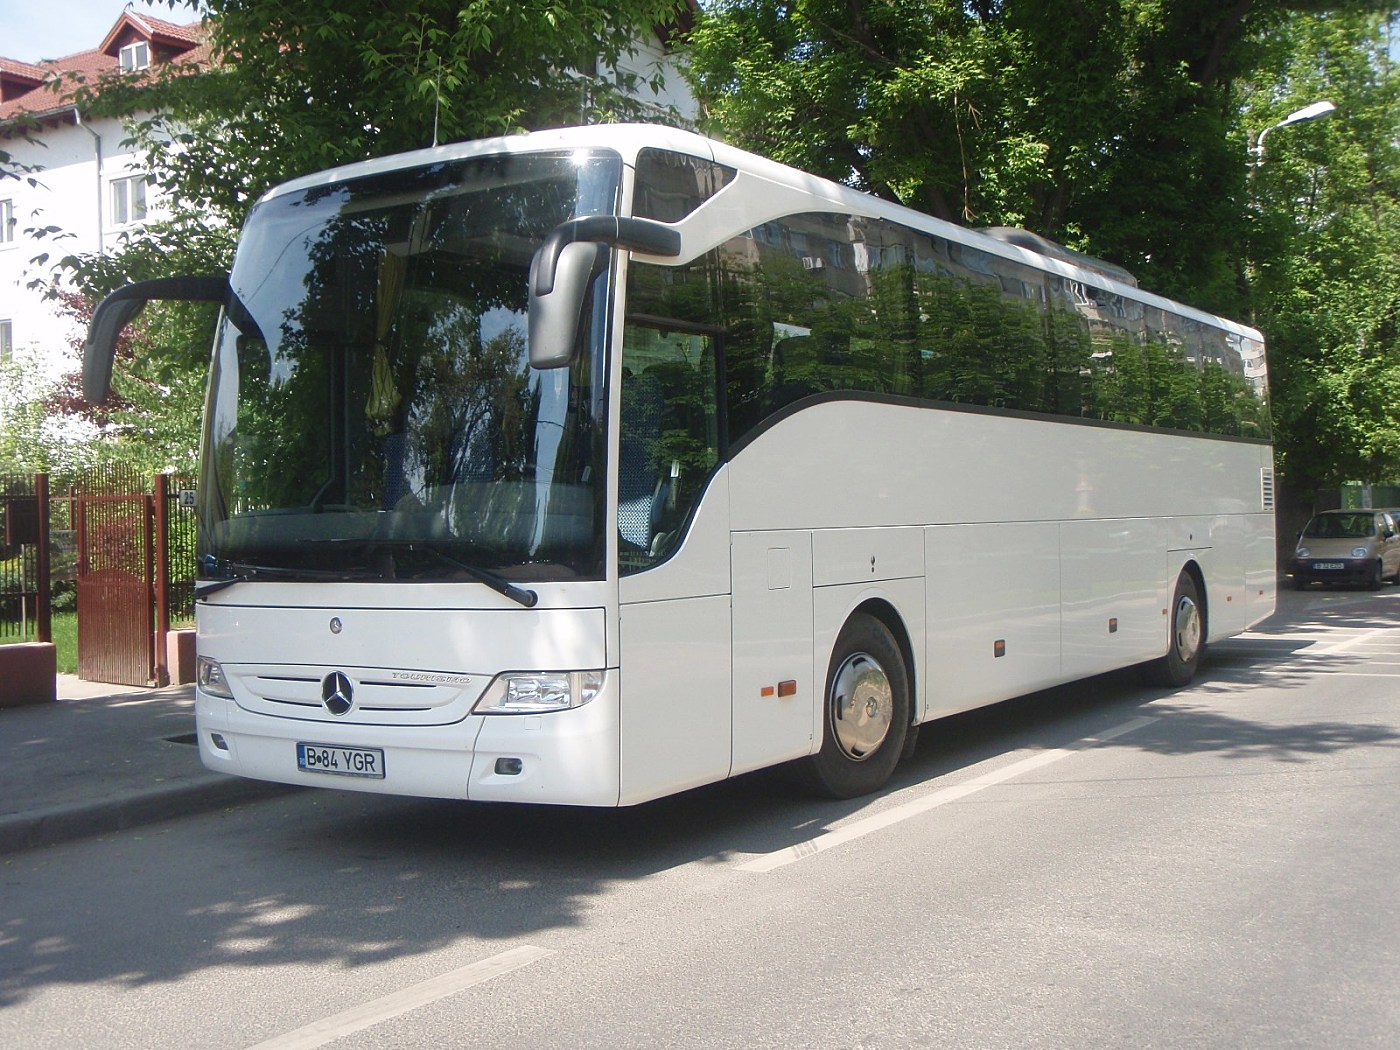 Mercedes-Benz Tourismo 15RHD #B 84 YGR